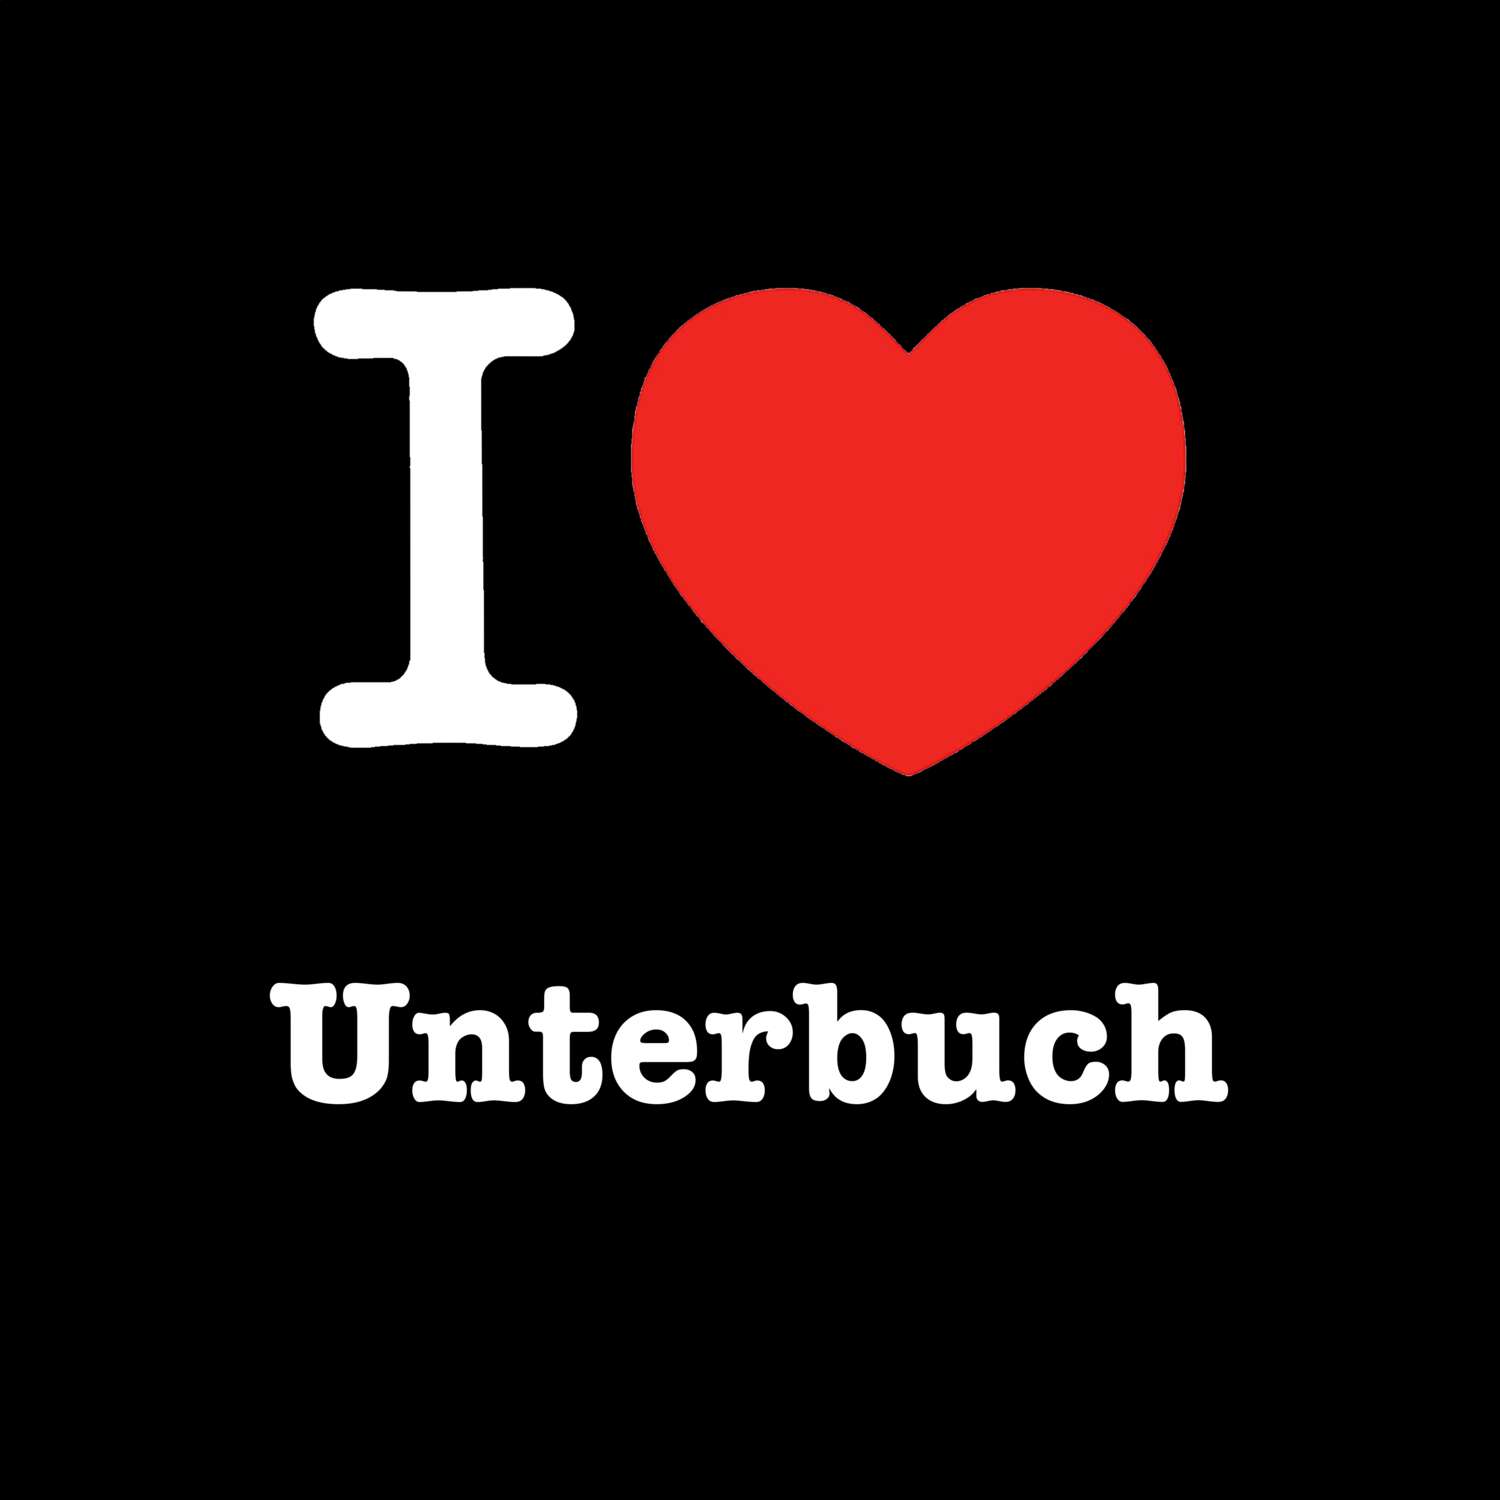 Unterbuch T-Shirt »I love«